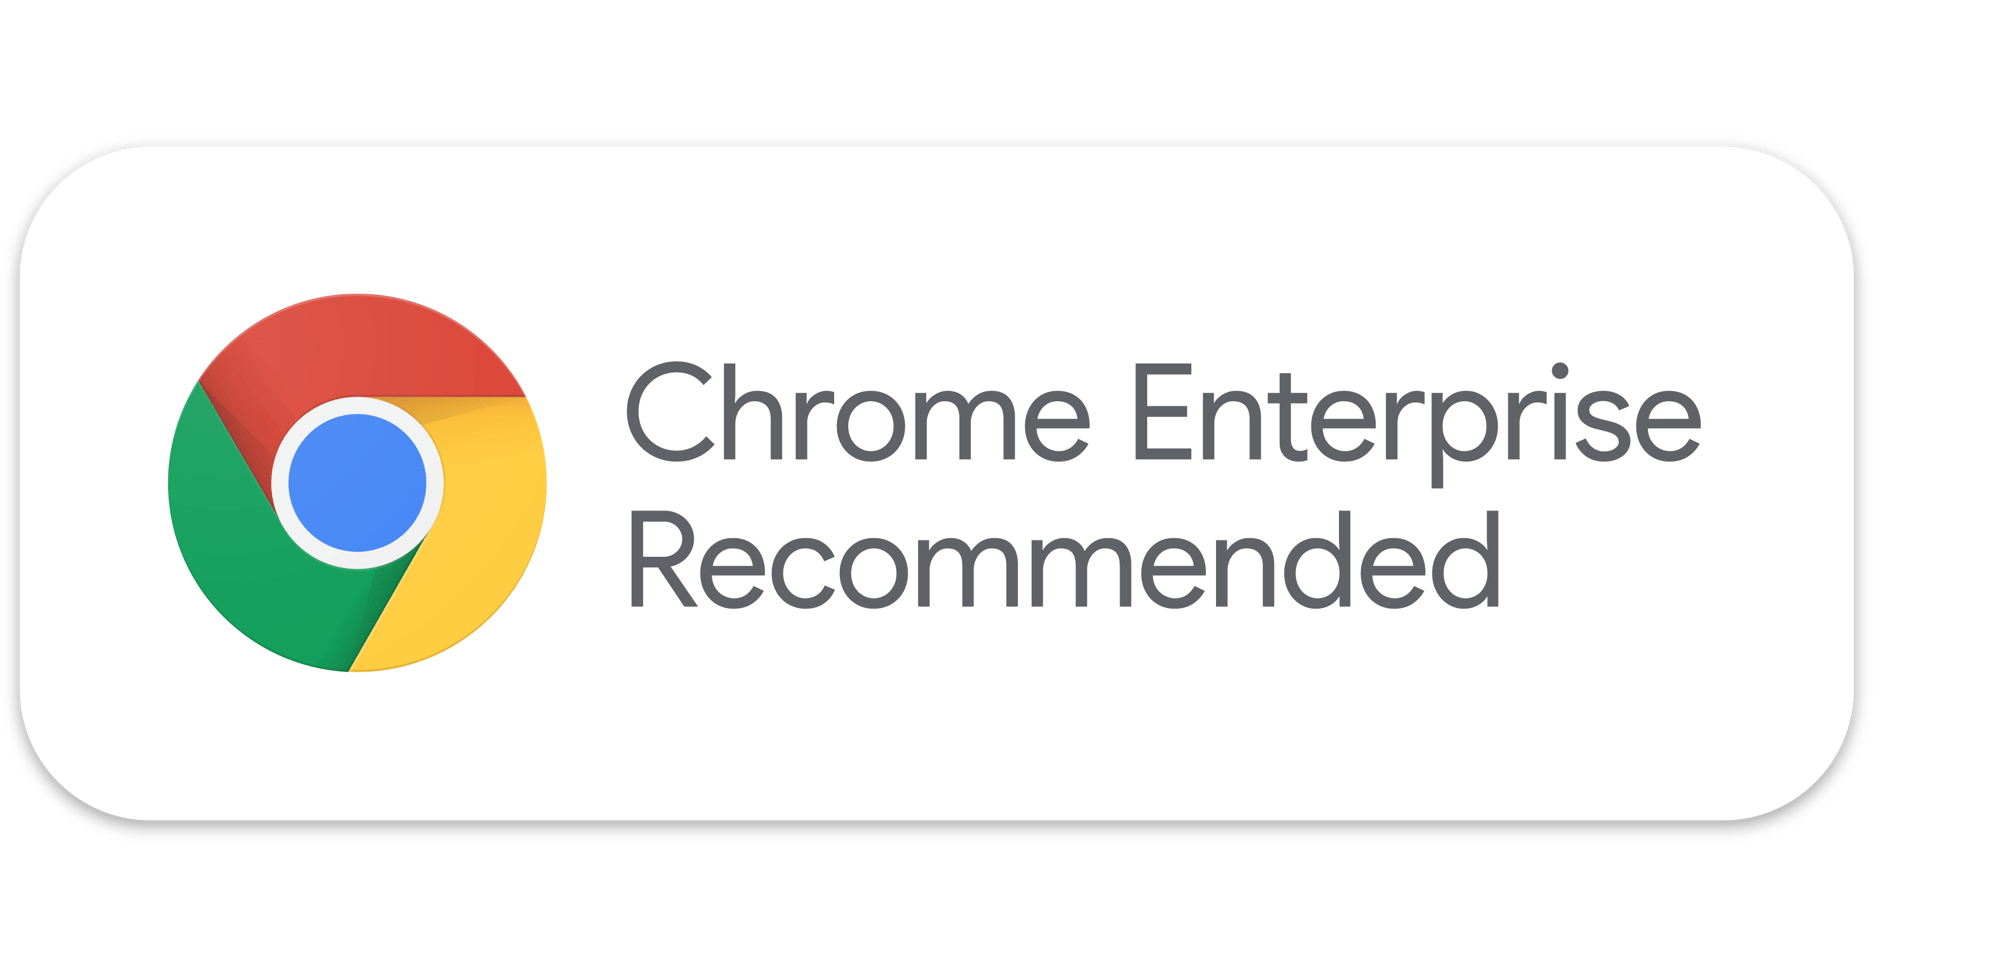 Chrome Enterprise Recommended solution official badge